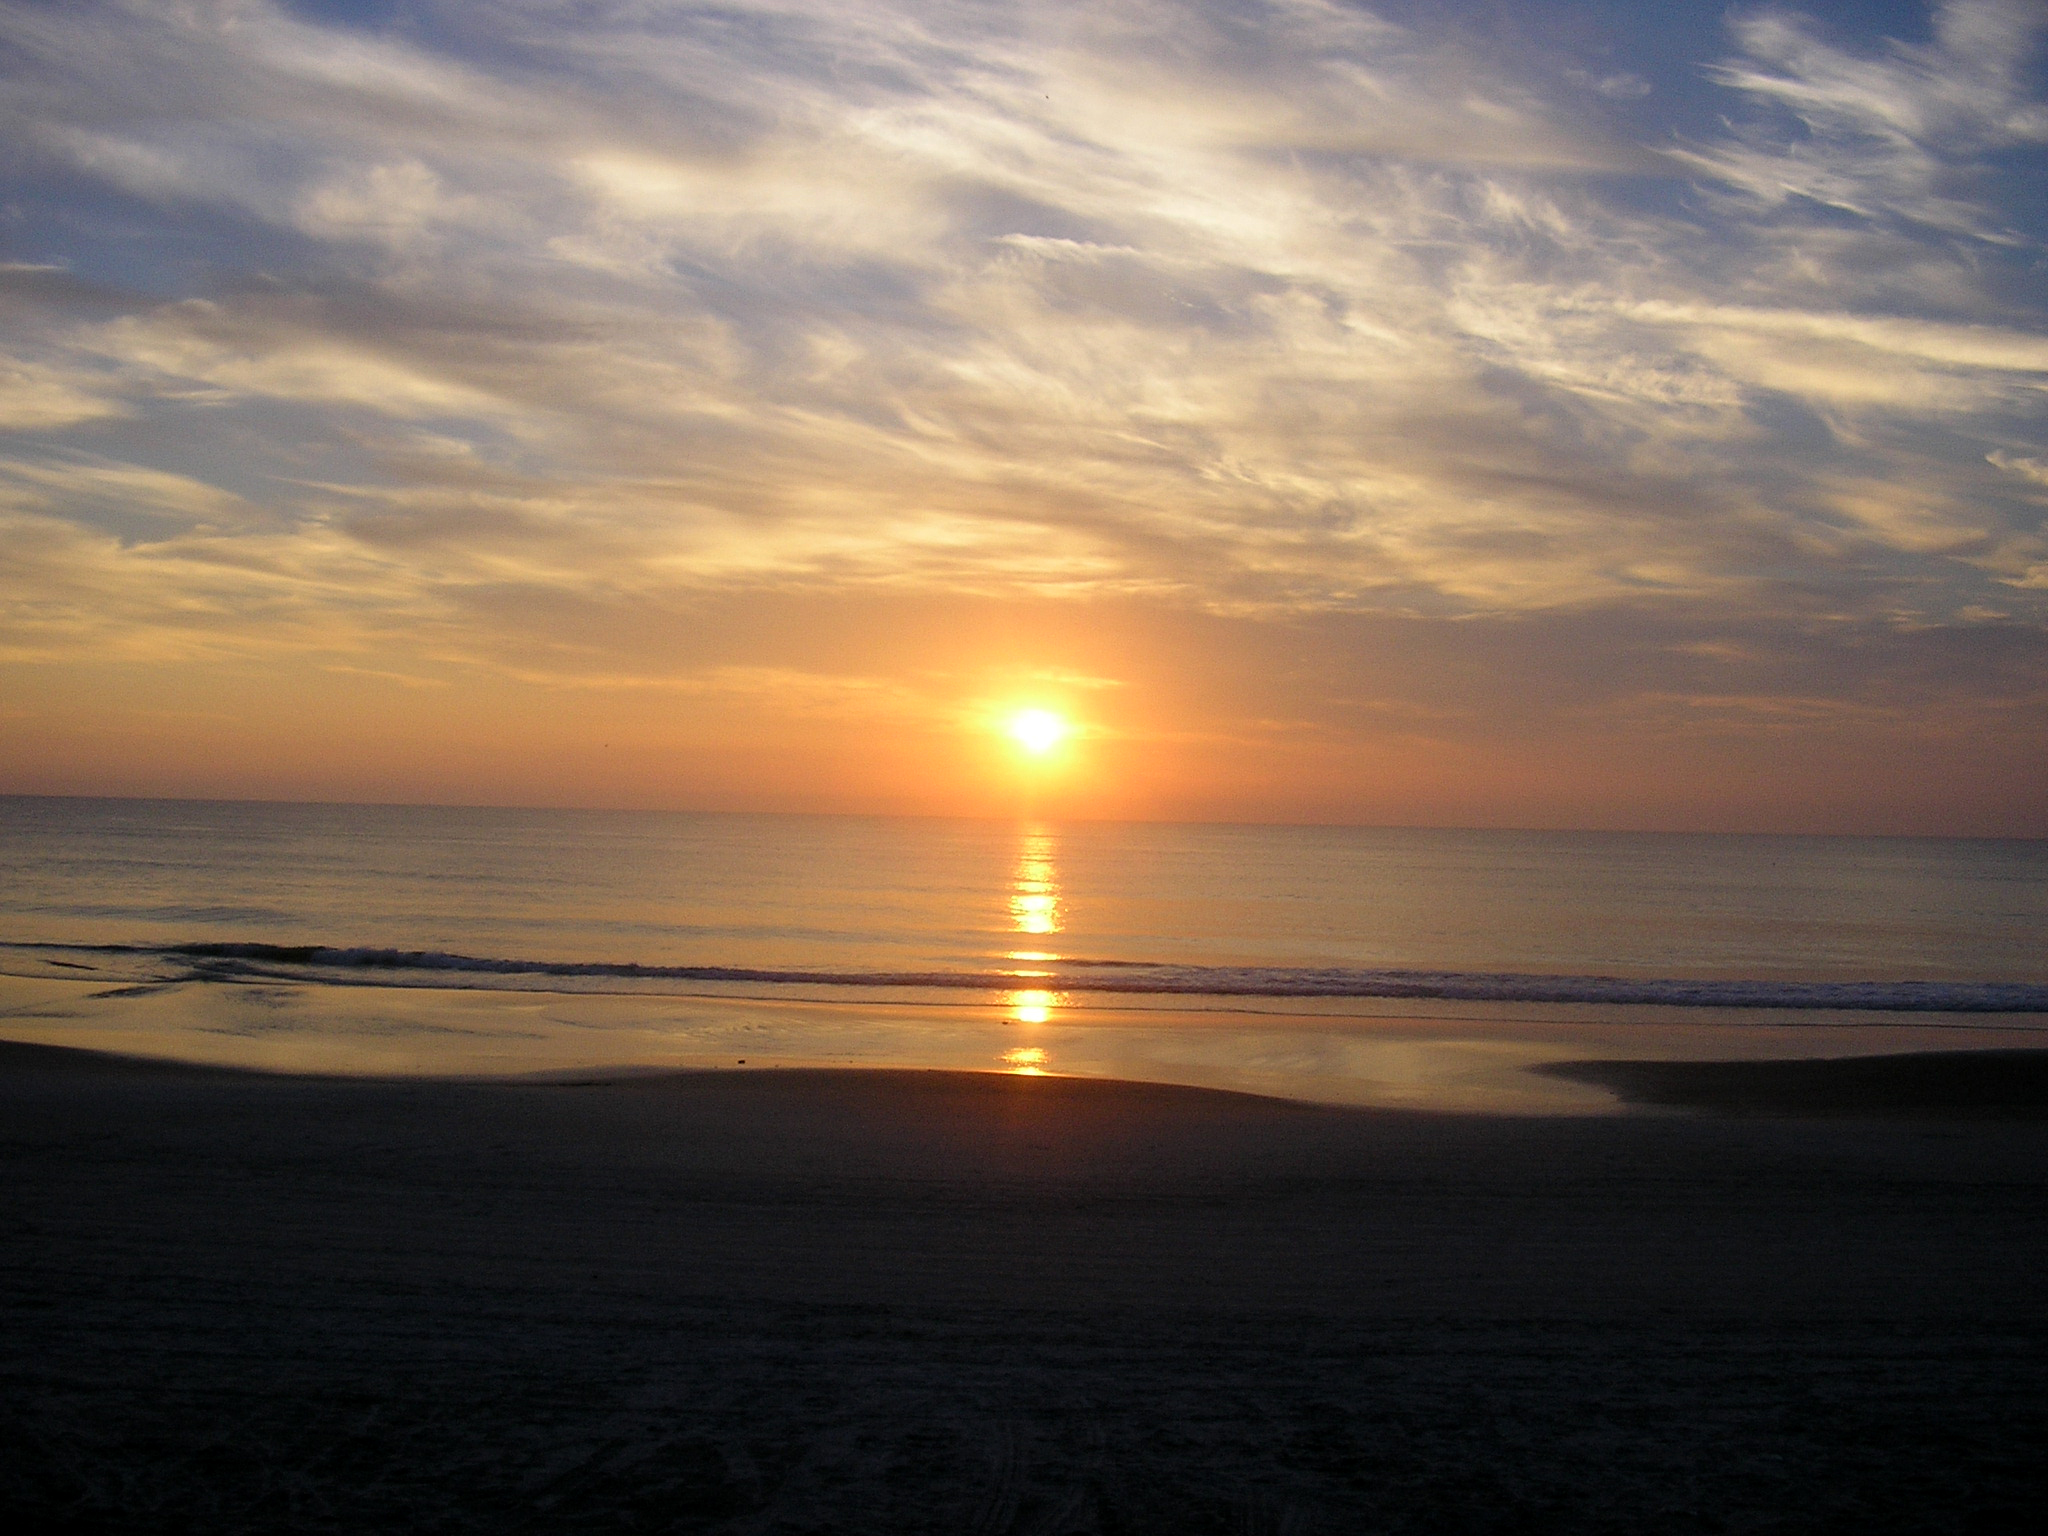 File:Sunrise-Daytona-Beach-FL.jpg - Wikimedia Commons